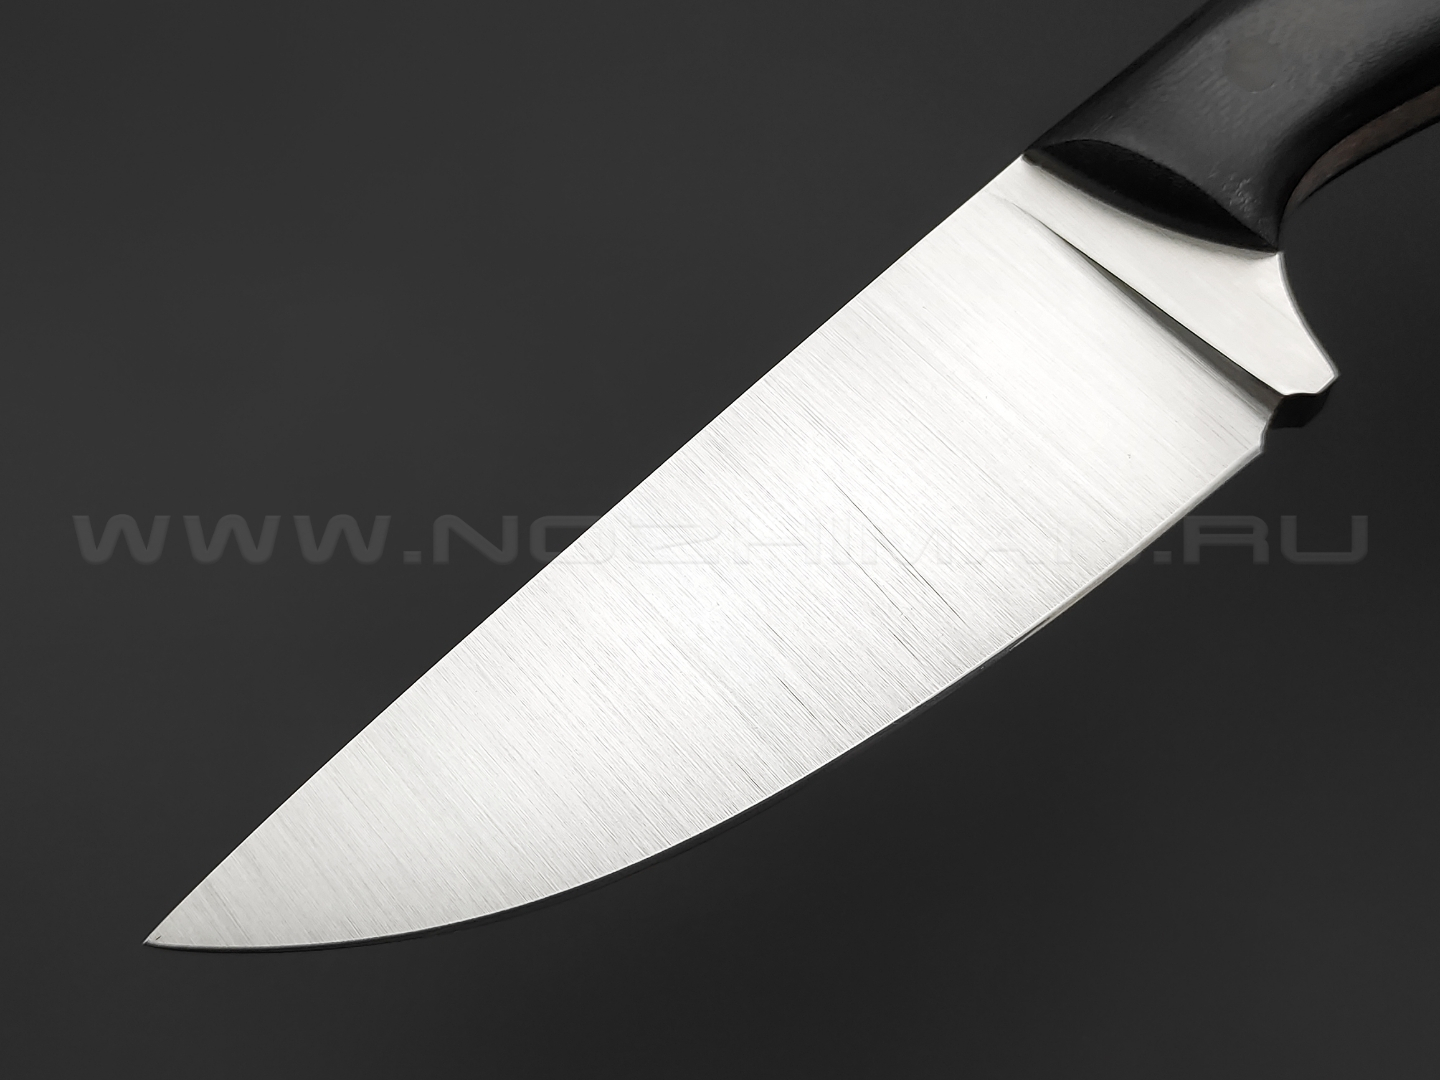 Волчий Век нож Mark-I сталь Krupp 1.4116 WA 6.6 мм, рукоять G10 black